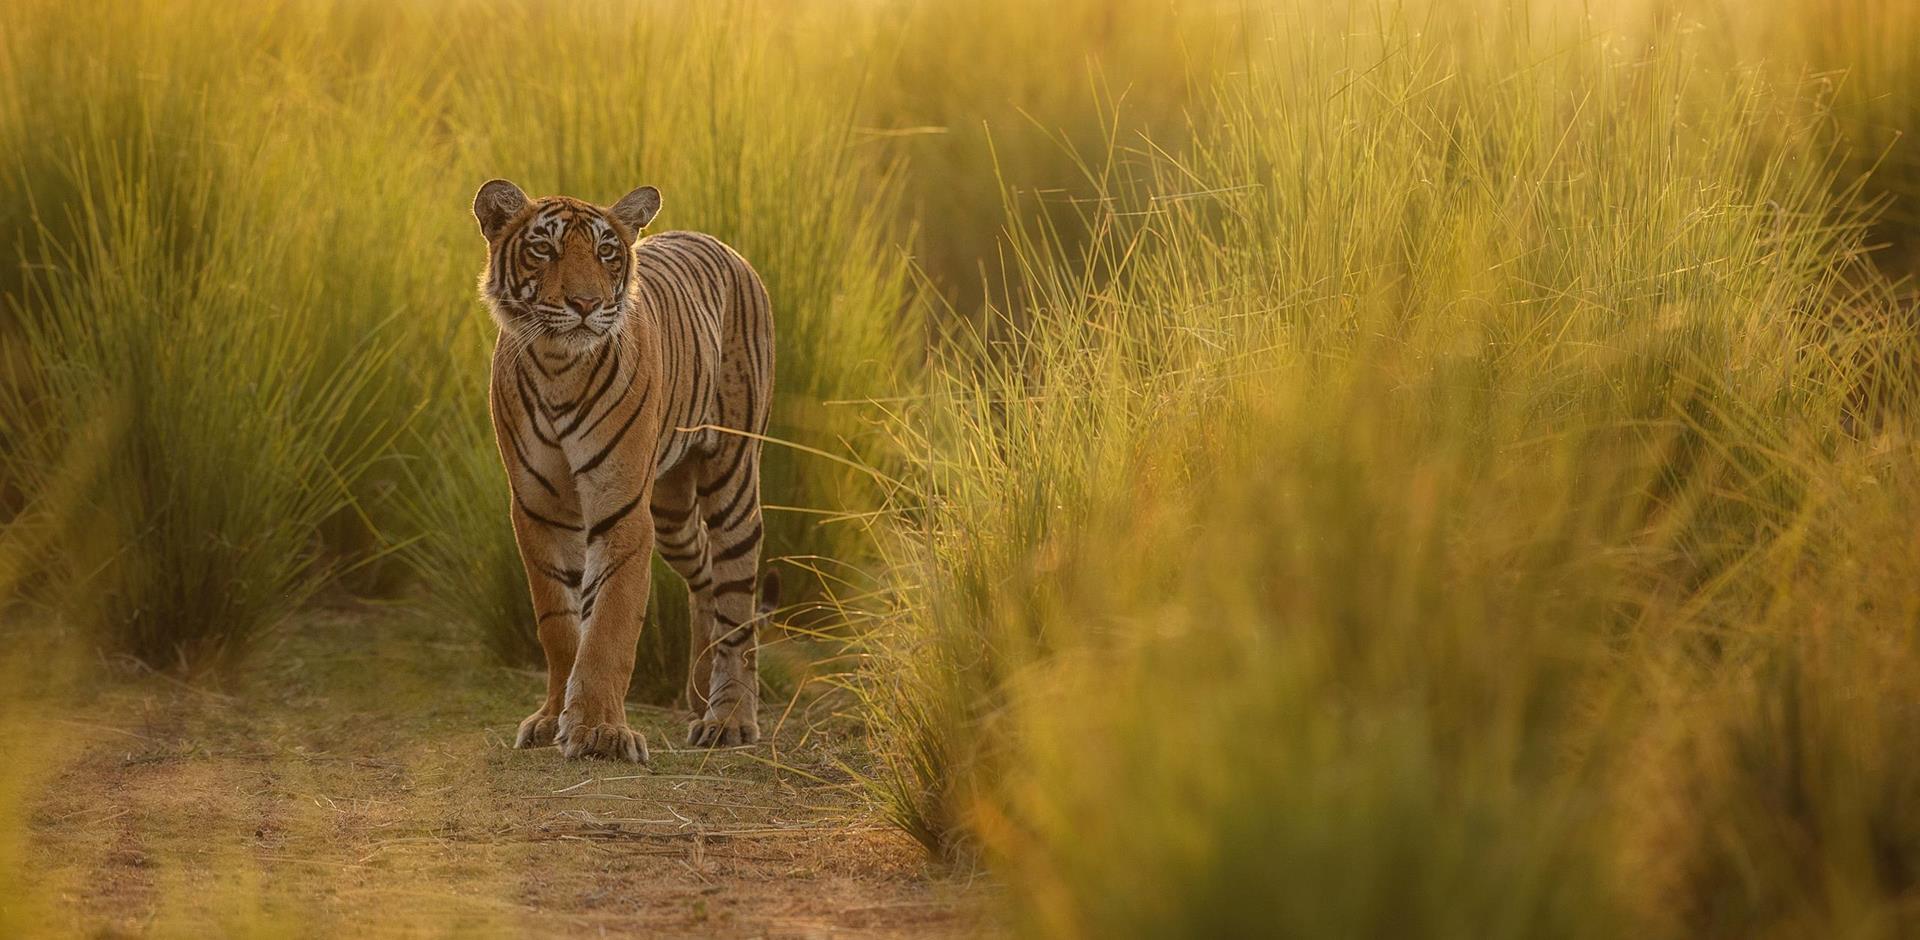 Tiger in long grass, tiger safari holidays